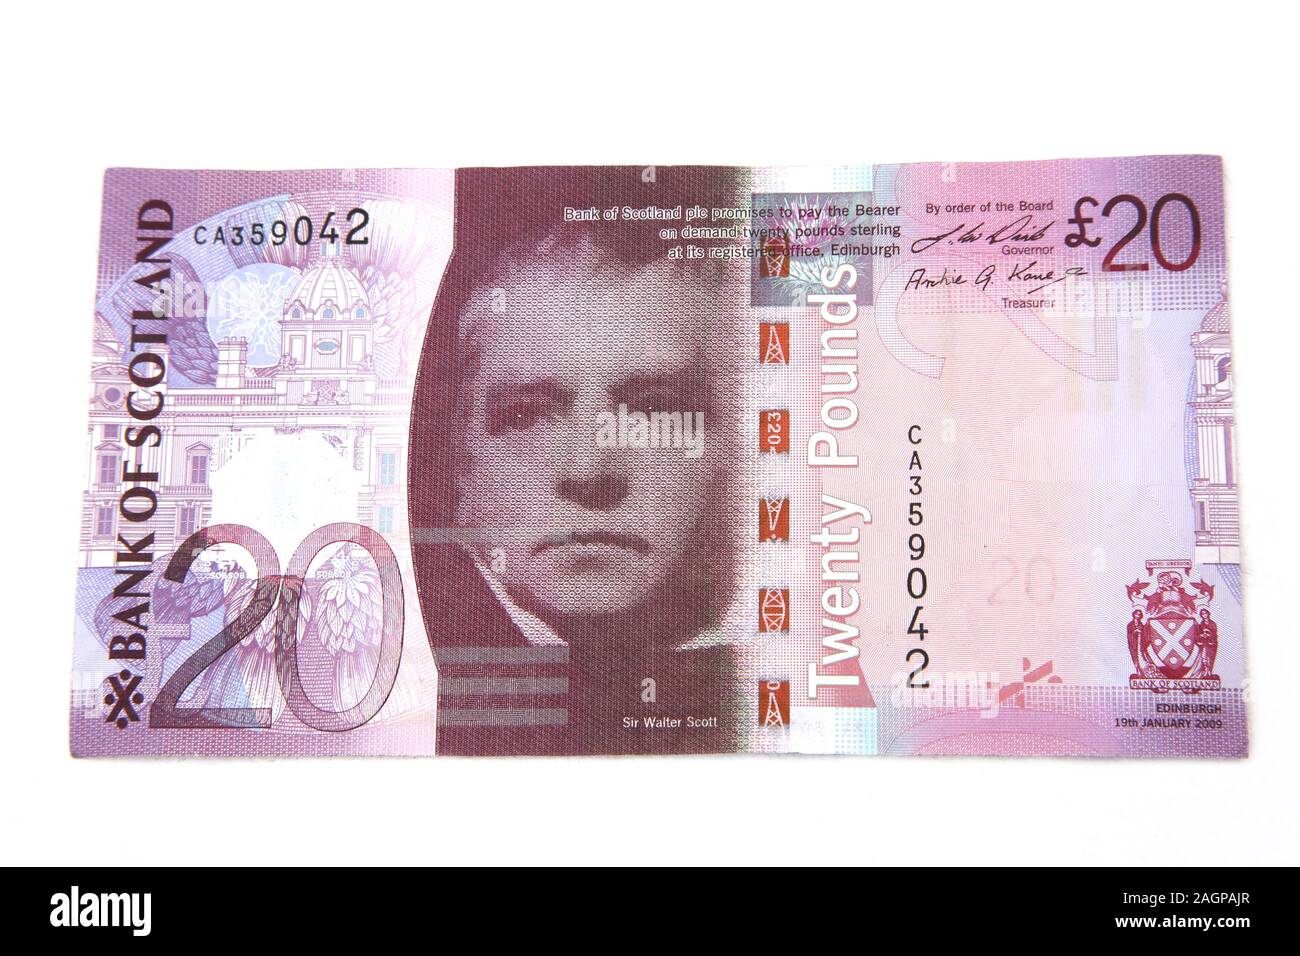 Sir Walter Scott on Obverse of Bank of Scotland Twenty Pound Note Stock Photo